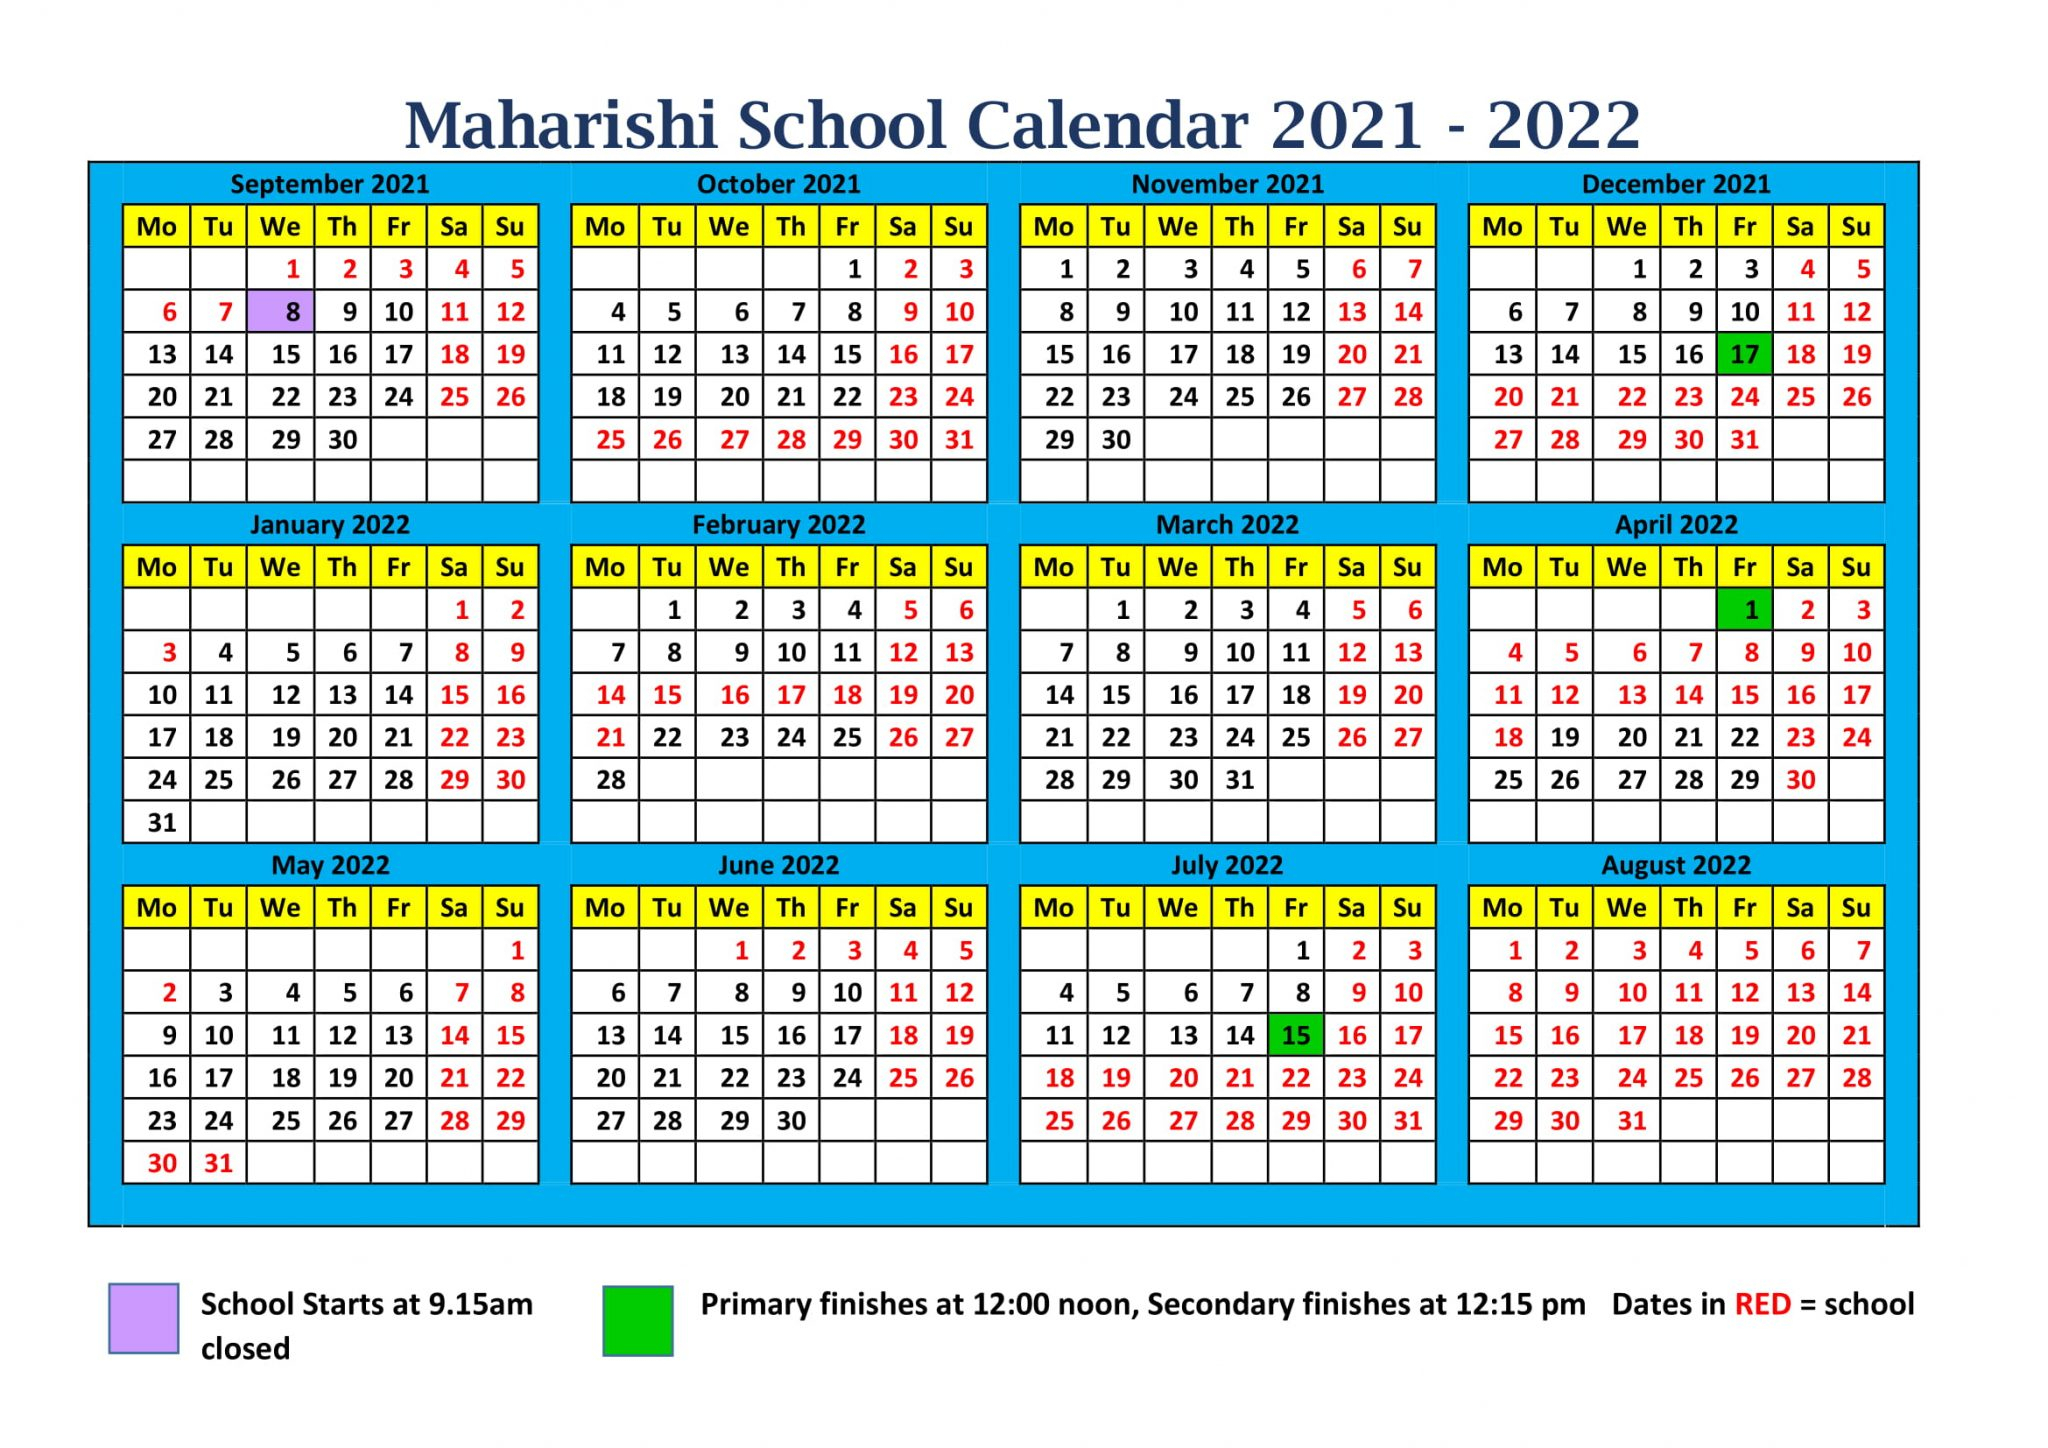 School Calendar 2021-2022 - Maharishi School